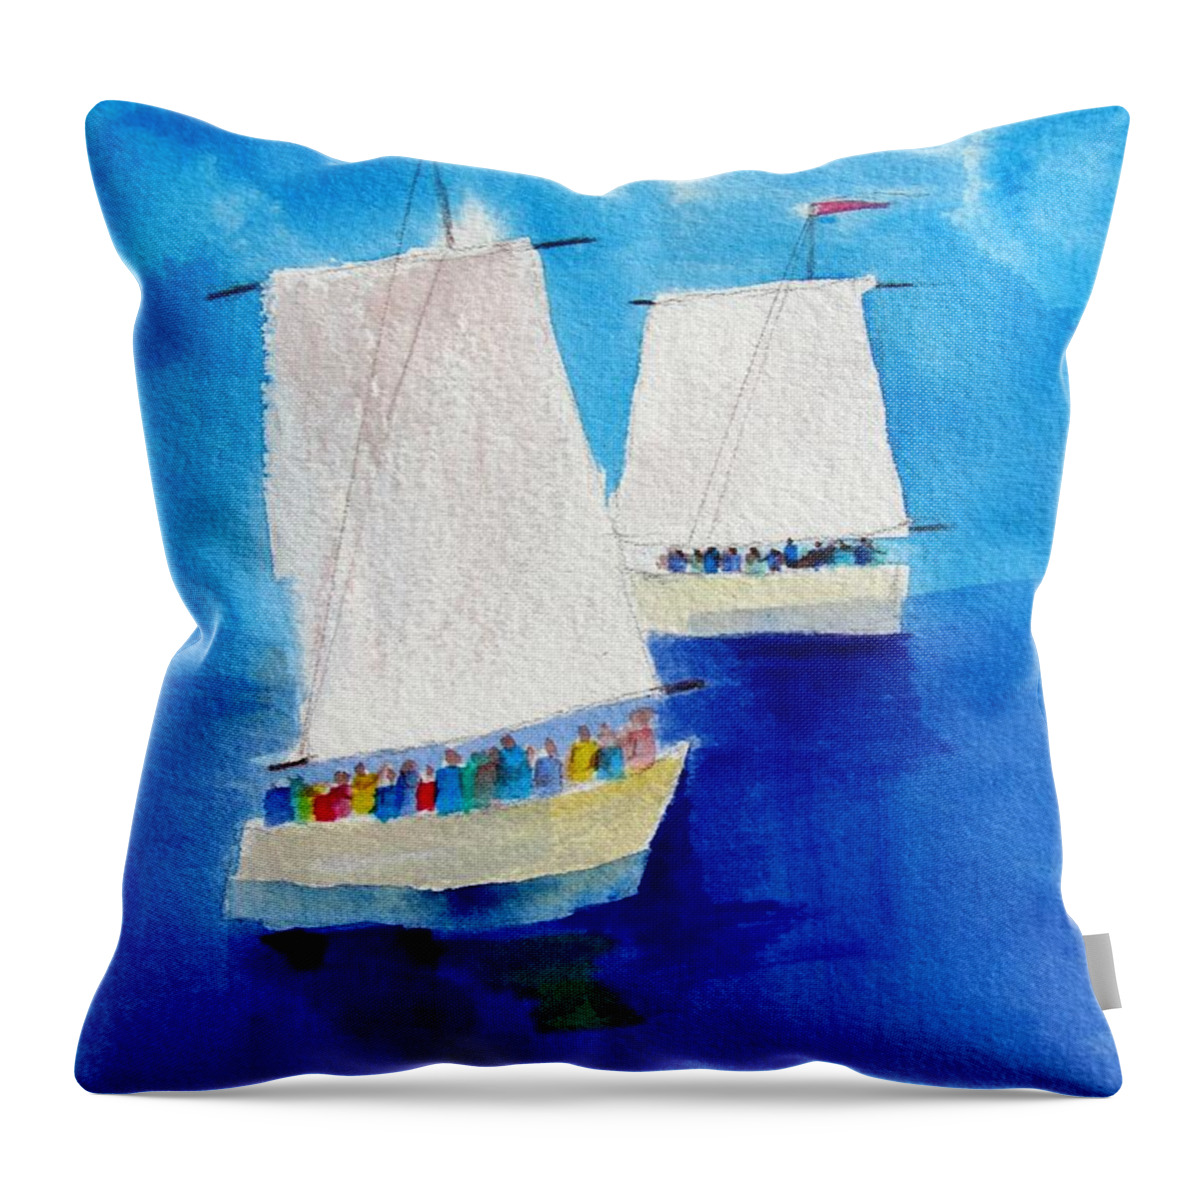 Sailboats Throw Pillow featuring the painting 2 Sailboats by Carlin Blahnik CarlinArtWatercolor